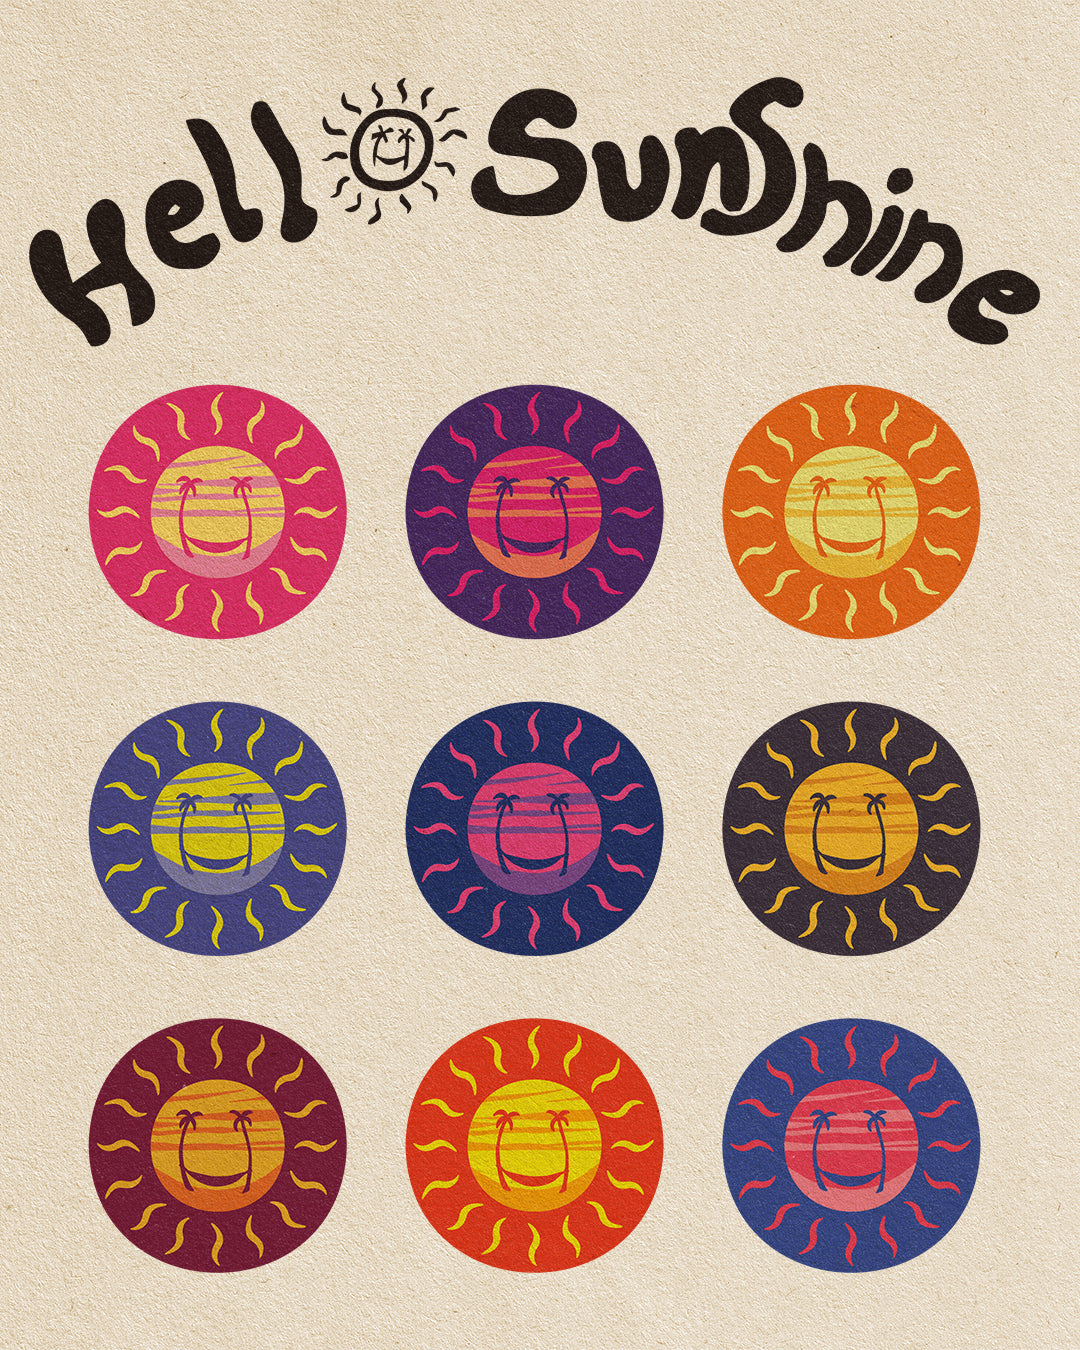 Hello Sunshine! - Freaks Japan collaboration